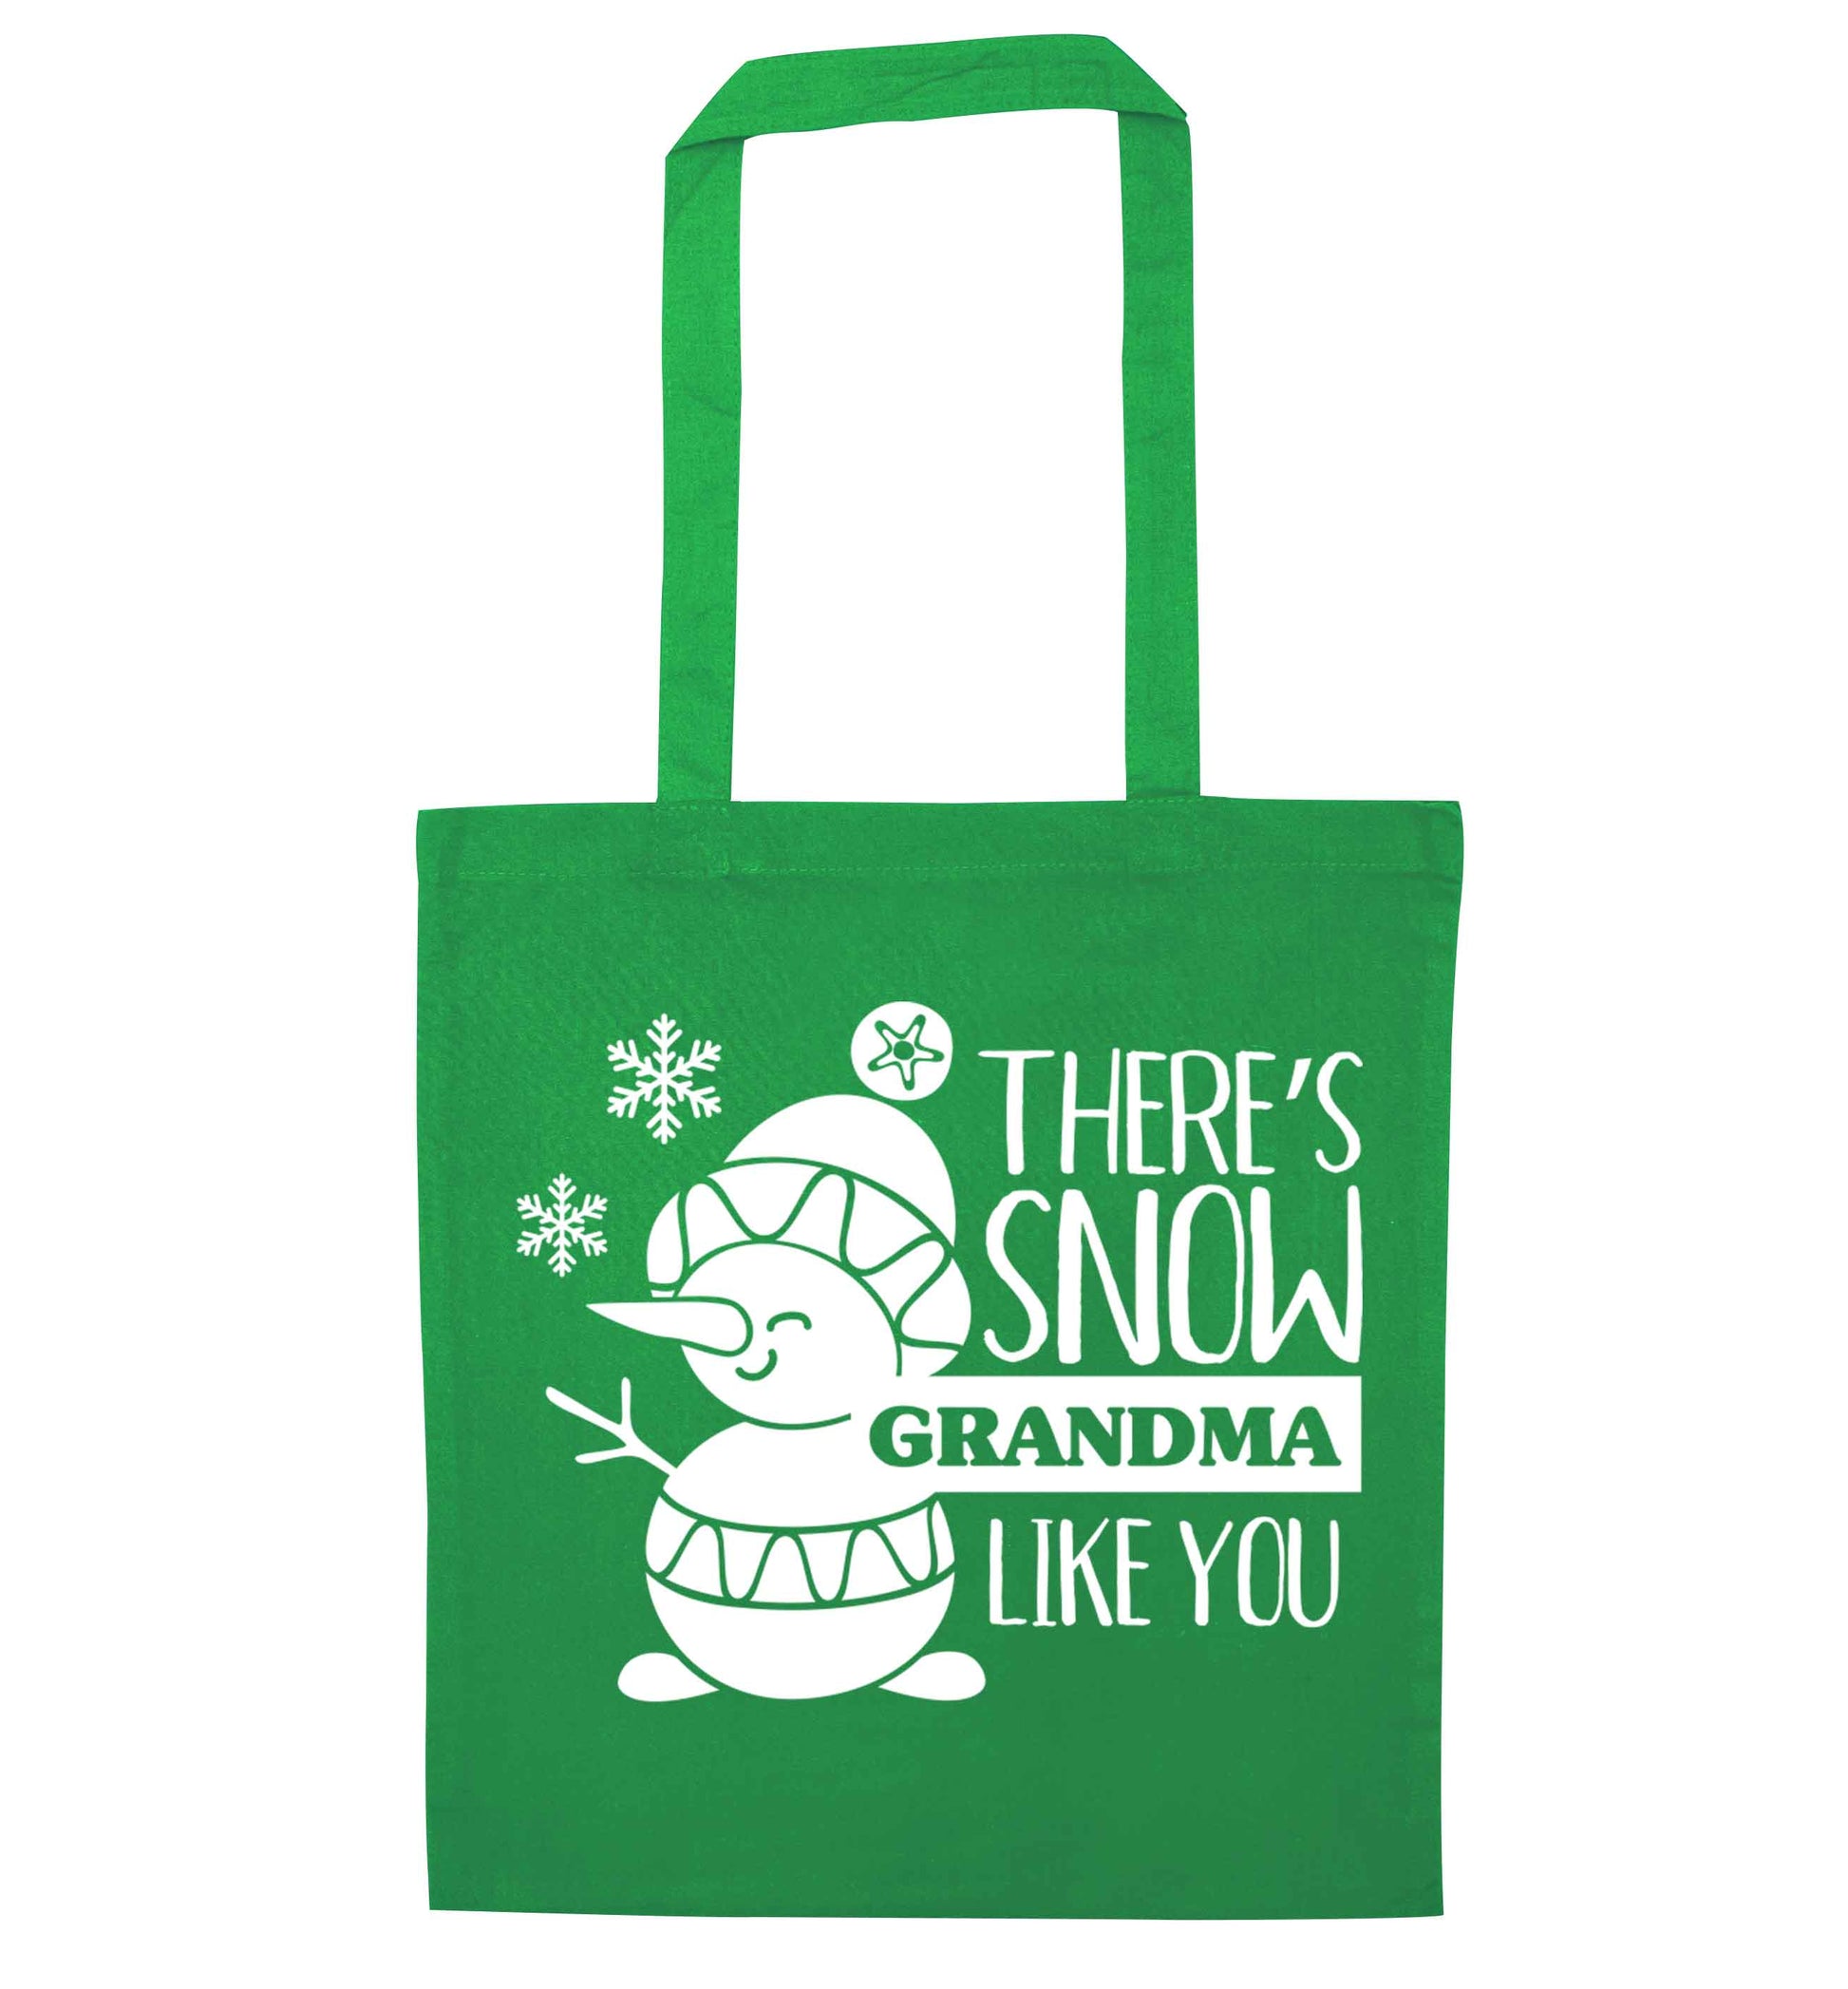 There's snow grandma like you green tote bag